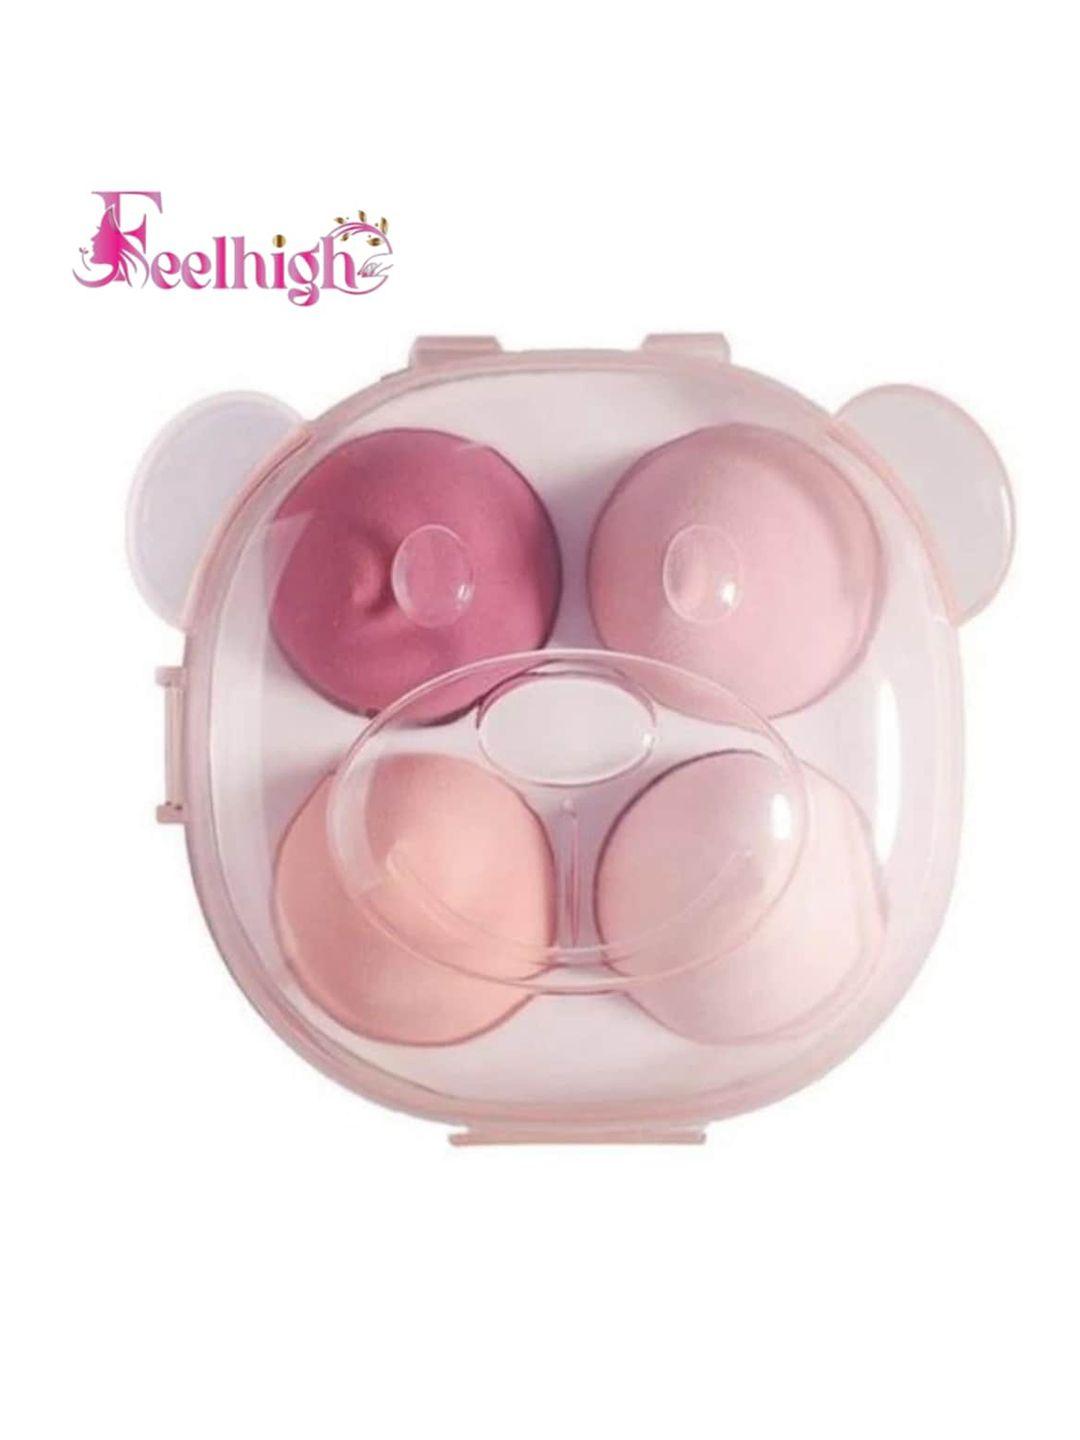 feelhigh set of 4 beauty blenders makeup soft sponges with storage box - pink